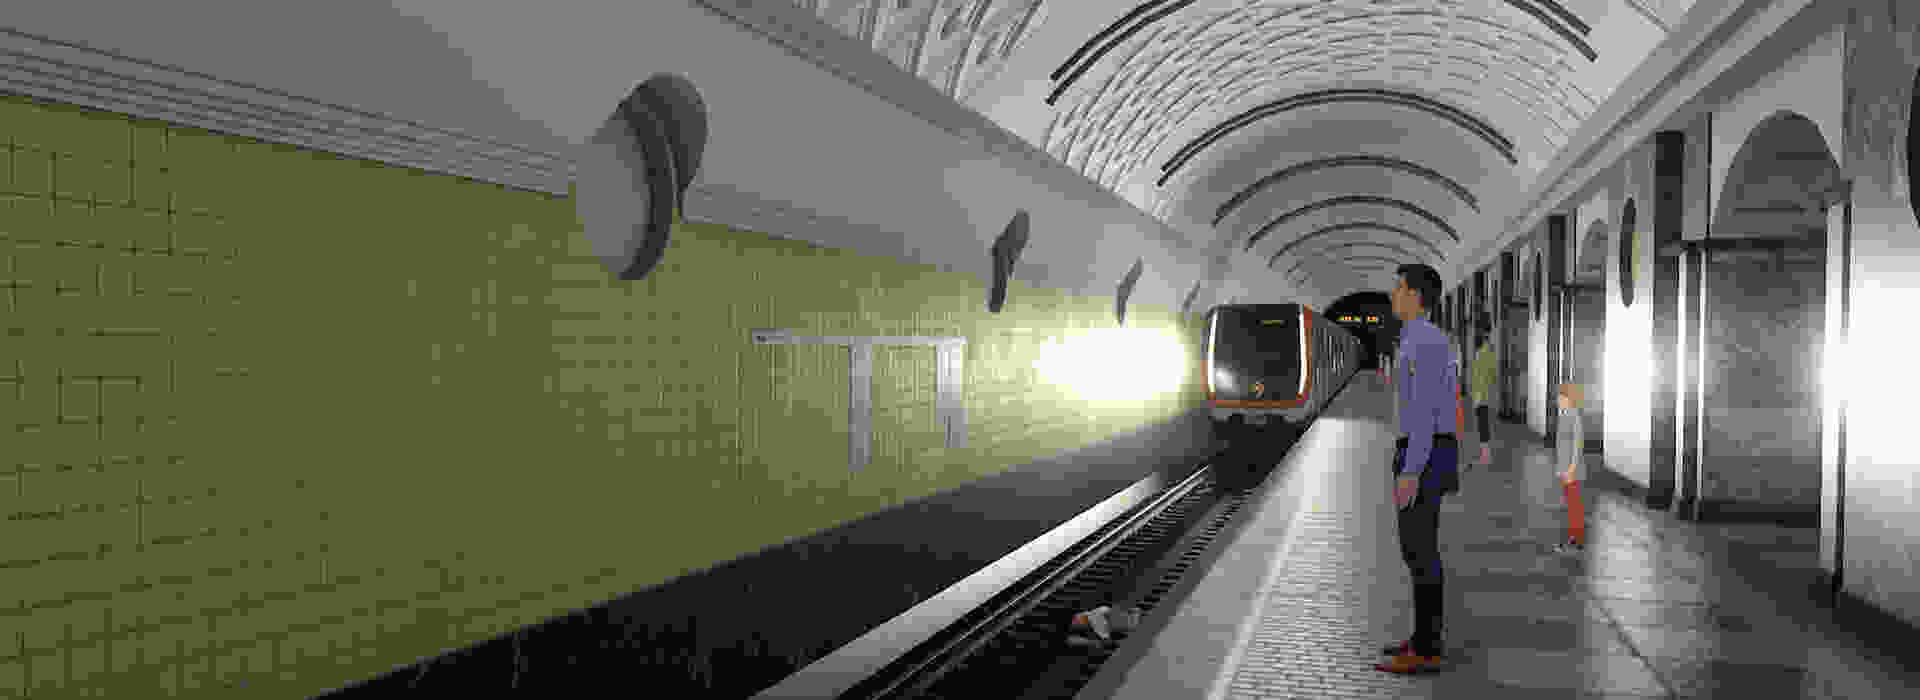 Metro 2022 ver3 mp4 snapshot 01